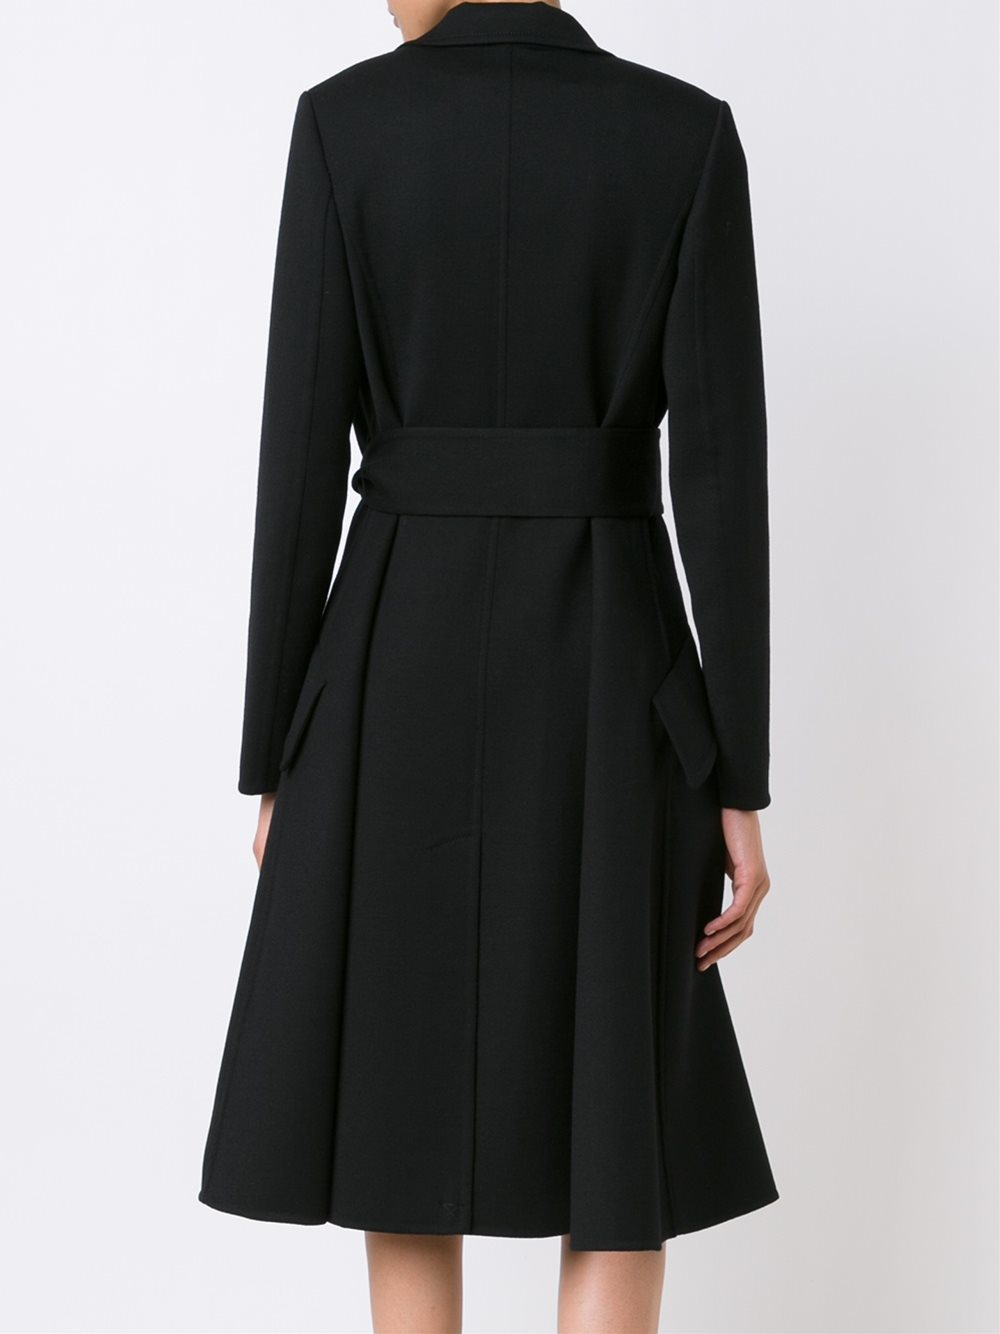 Carolina Herrera Wool Belted A-line Coat in Black - Lyst